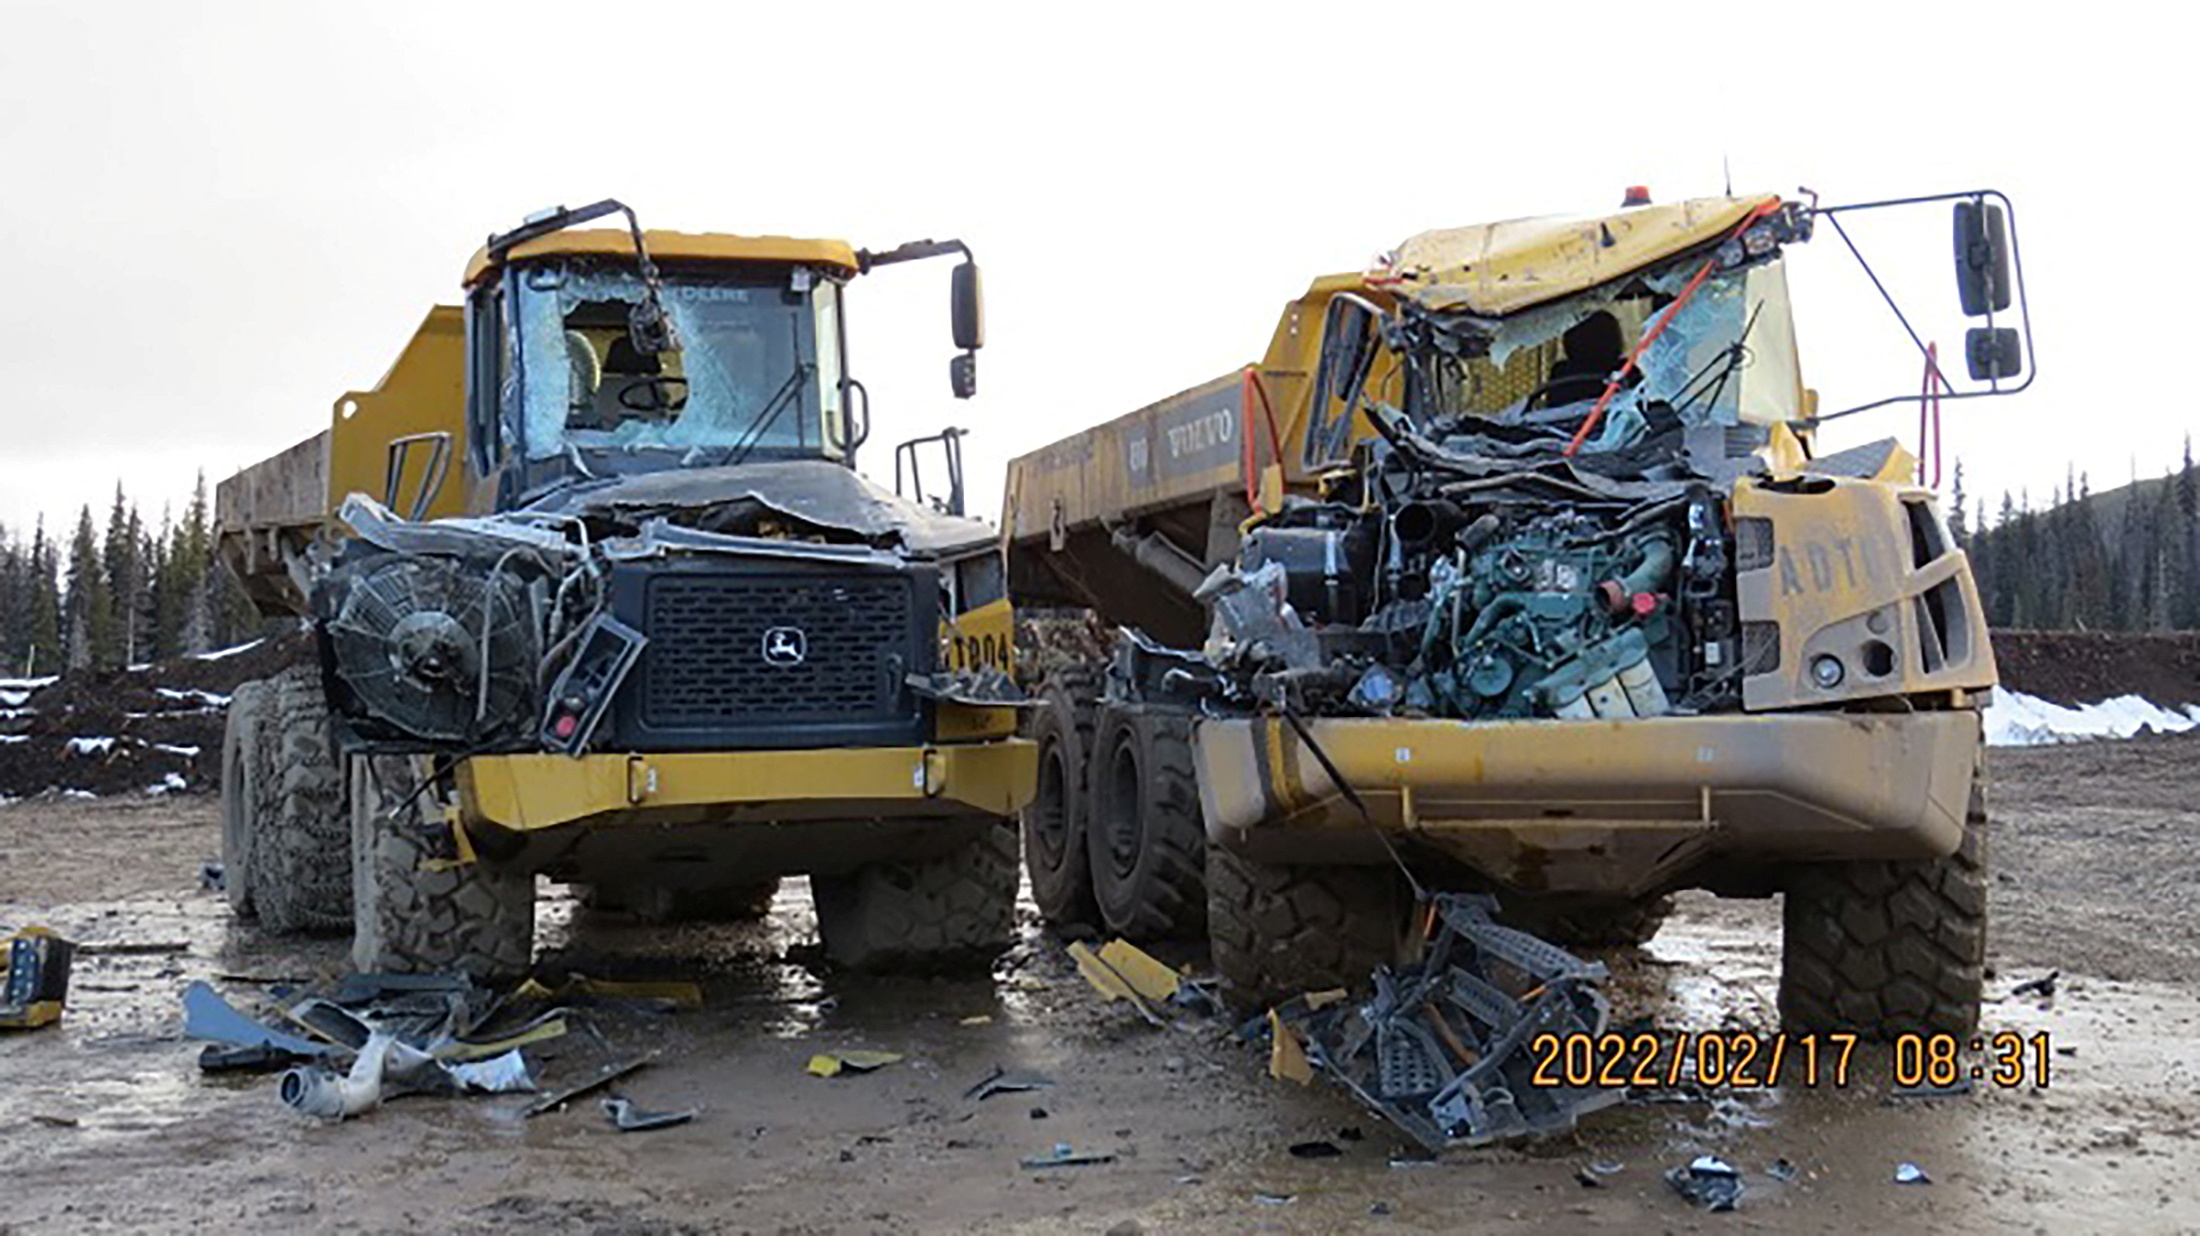 Damaged heavy equipment is seen at the Coastal GasLink facility near Houston